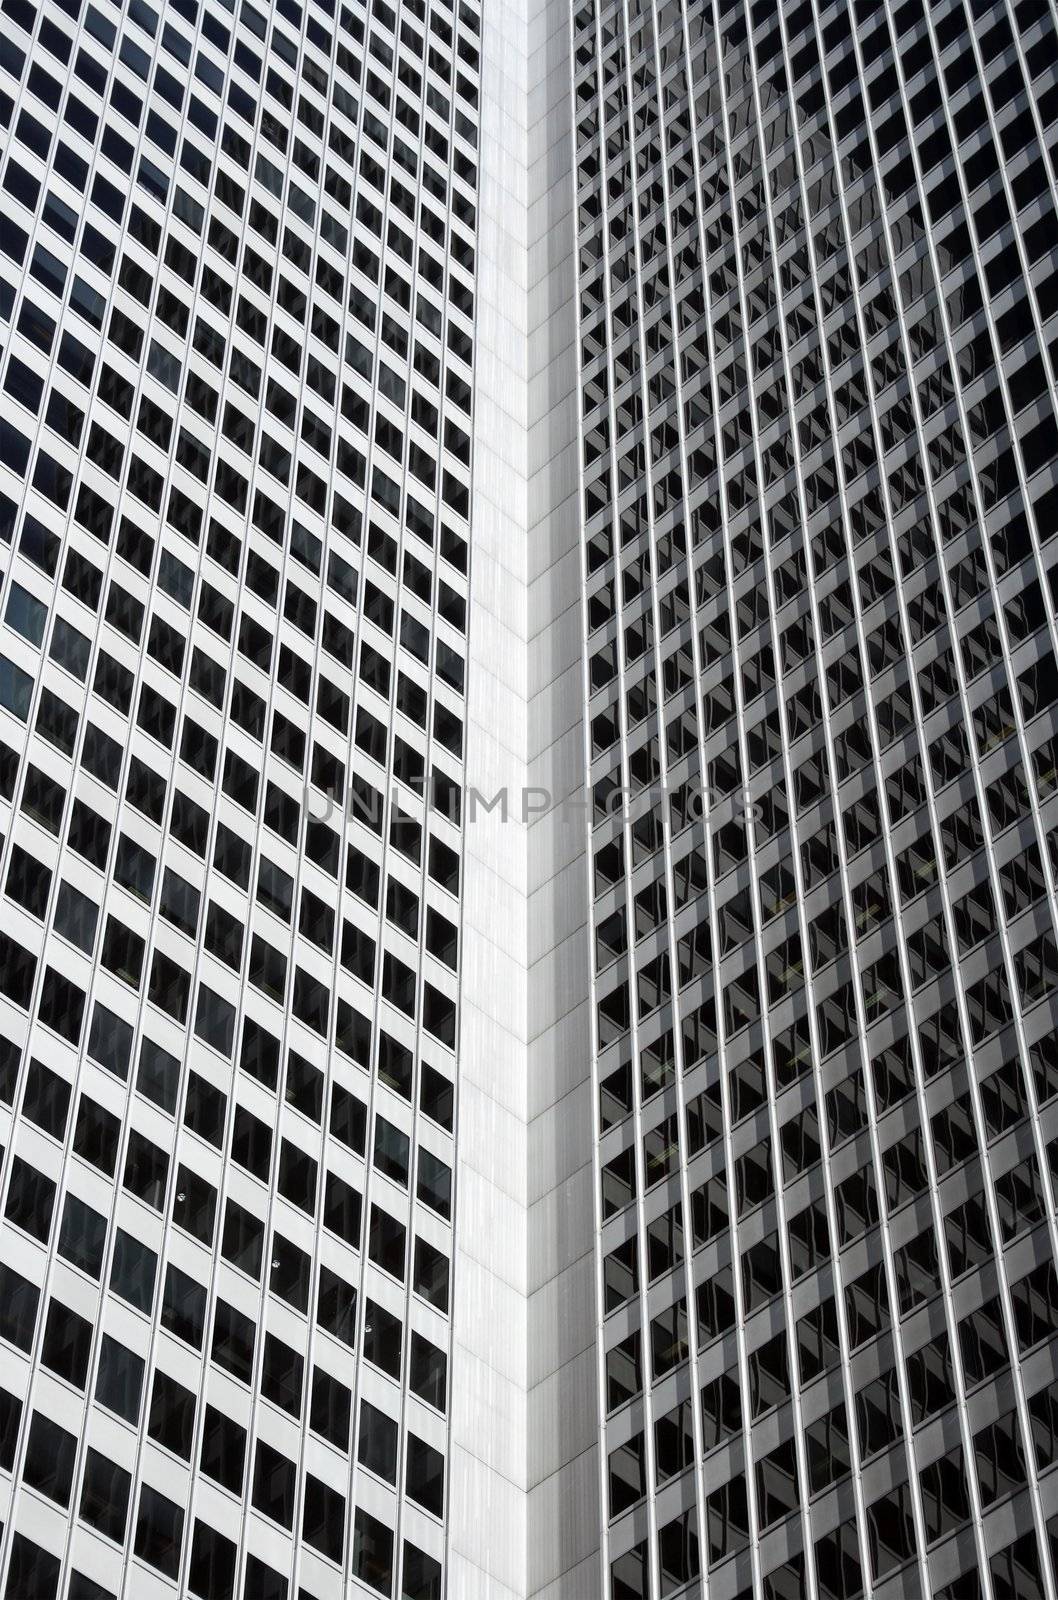 Inside corner and windows of a skyscraper by anikasalsera